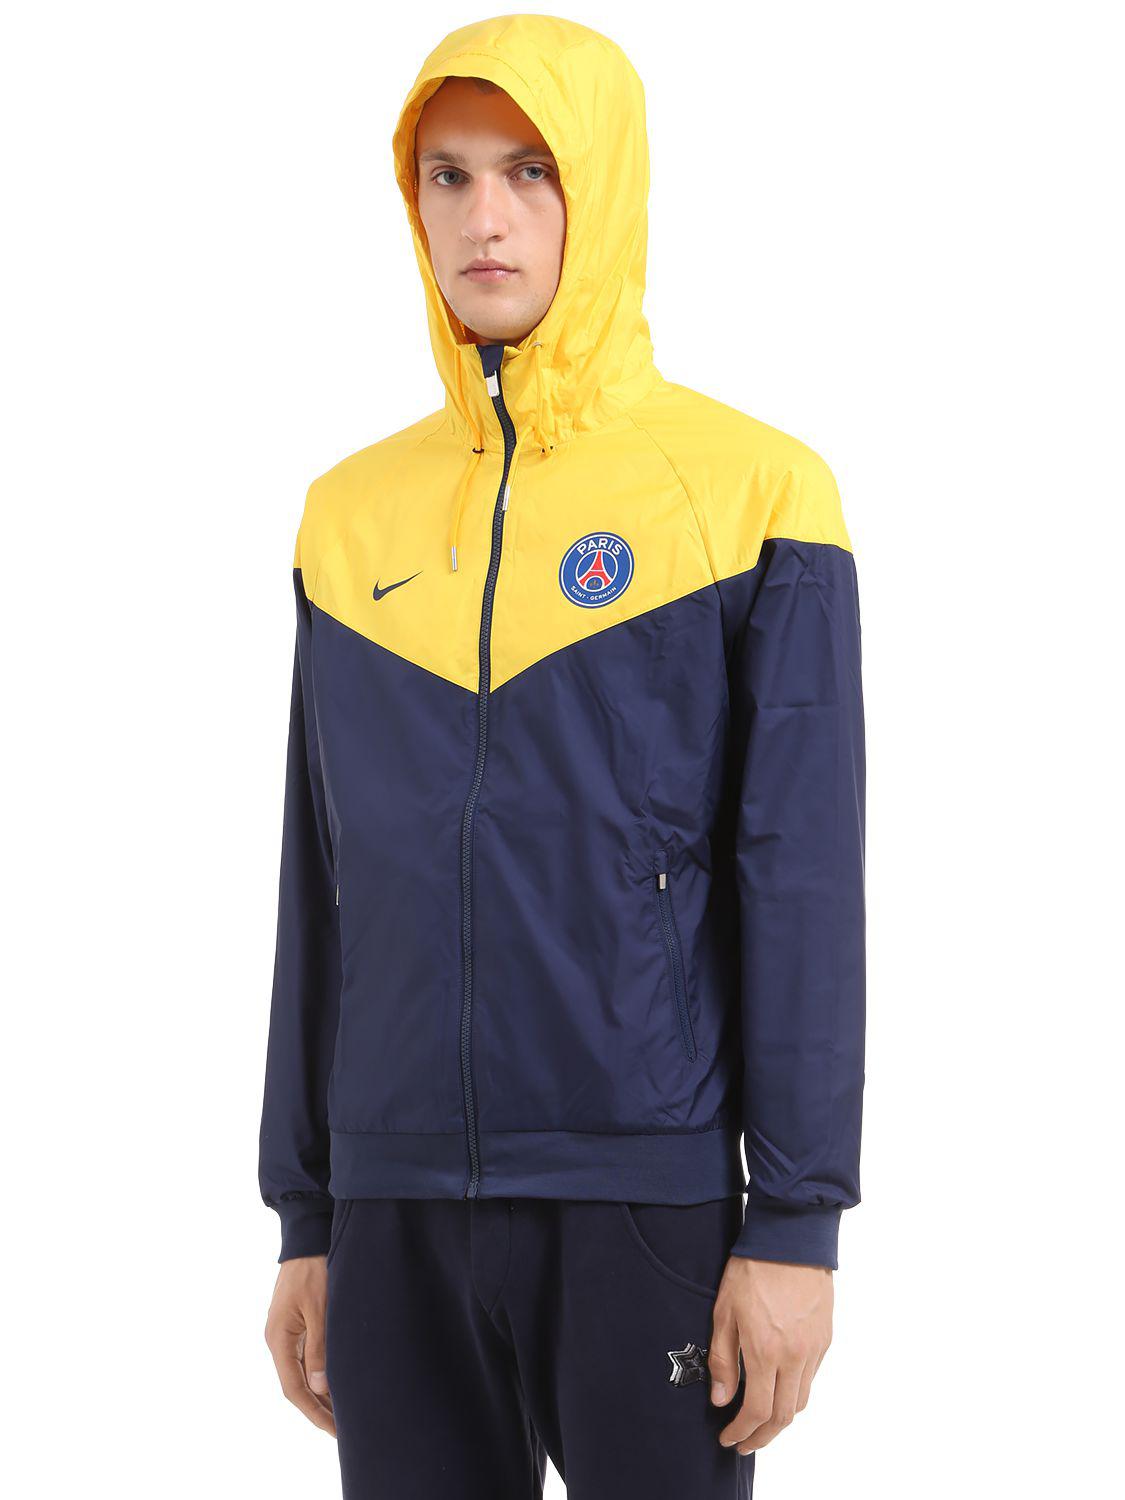 Nike Paris Saint-germain Windrunner Jacket in Navy/Yellow (Blue) for Men -  Lyst